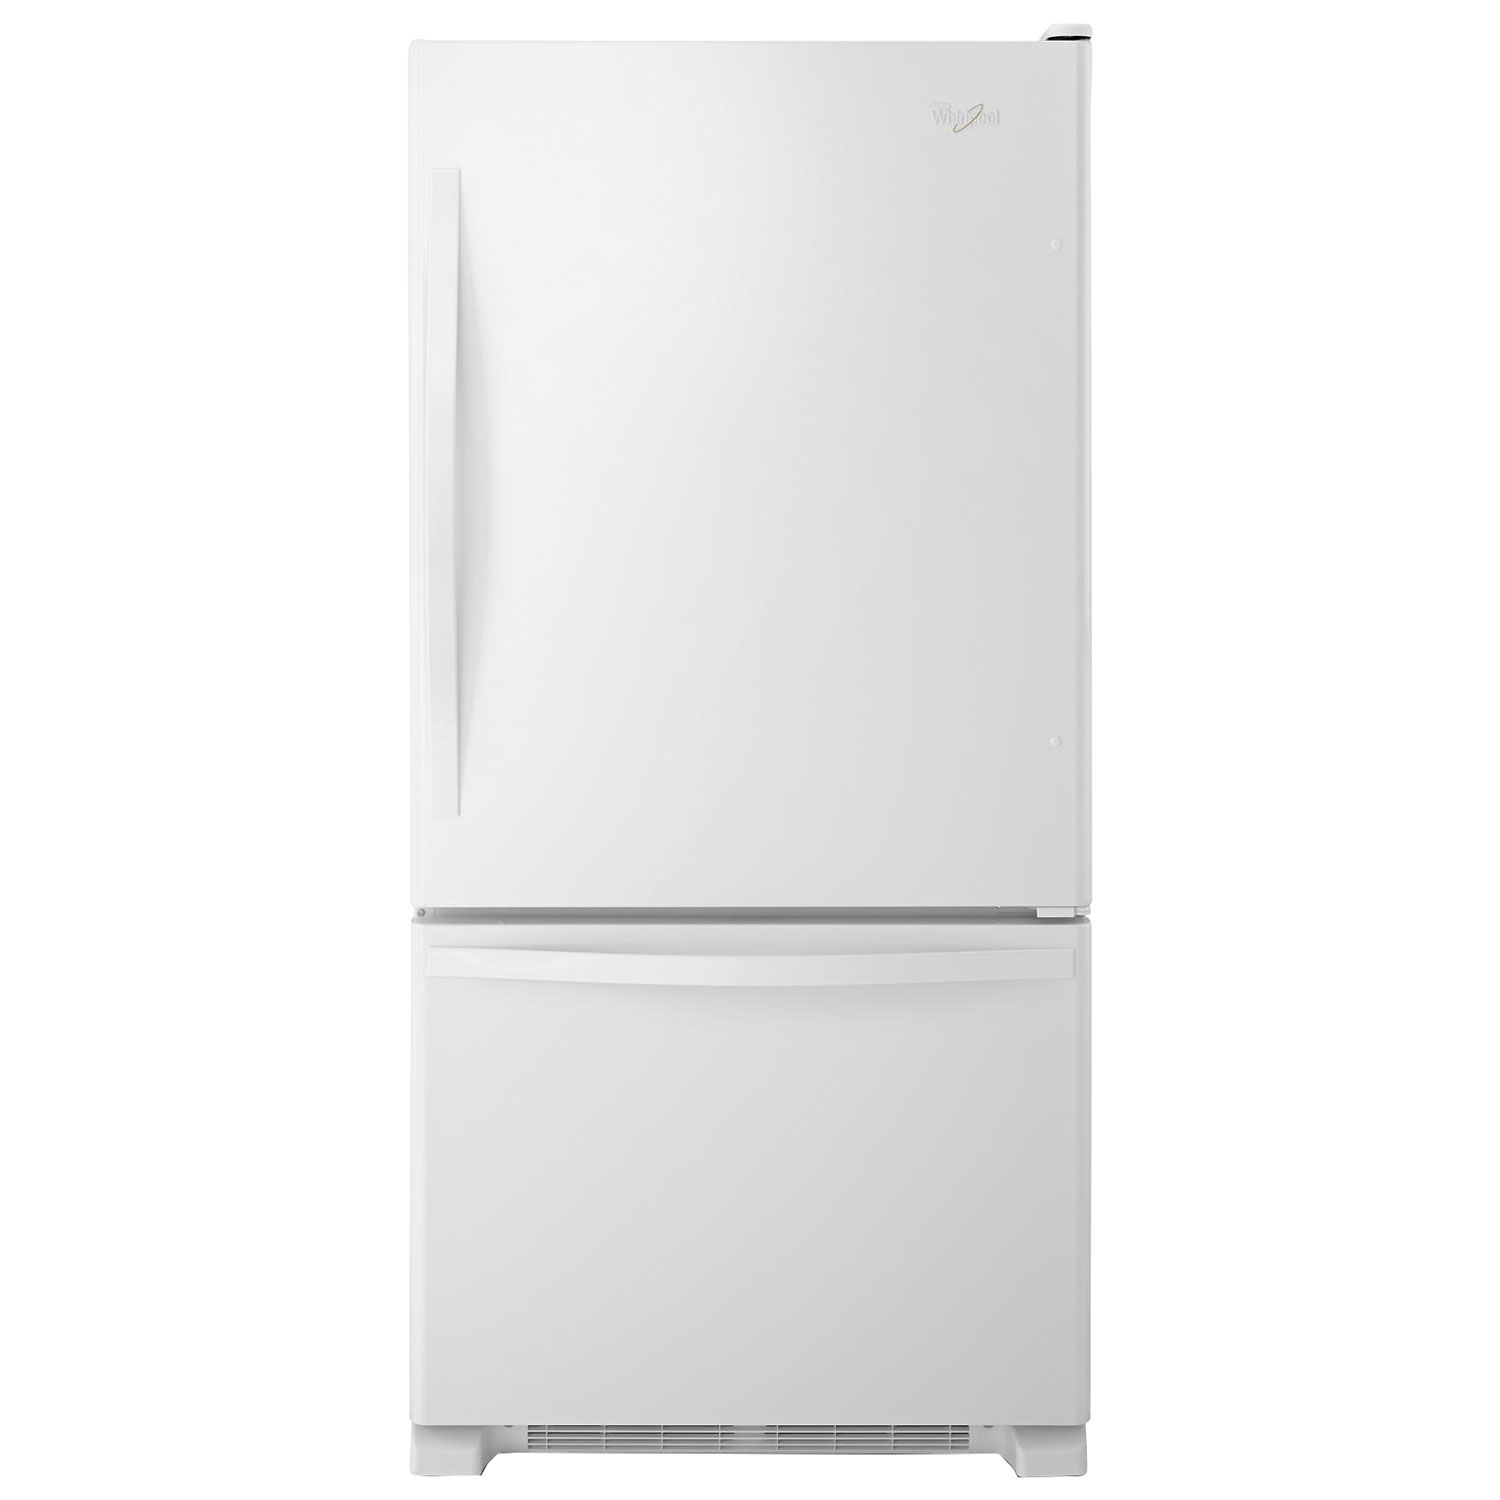 Whirlpool 30" 18.7 Cu. Ft. Bottom Freezer Refrigerator with LED Lighting - White-on-White